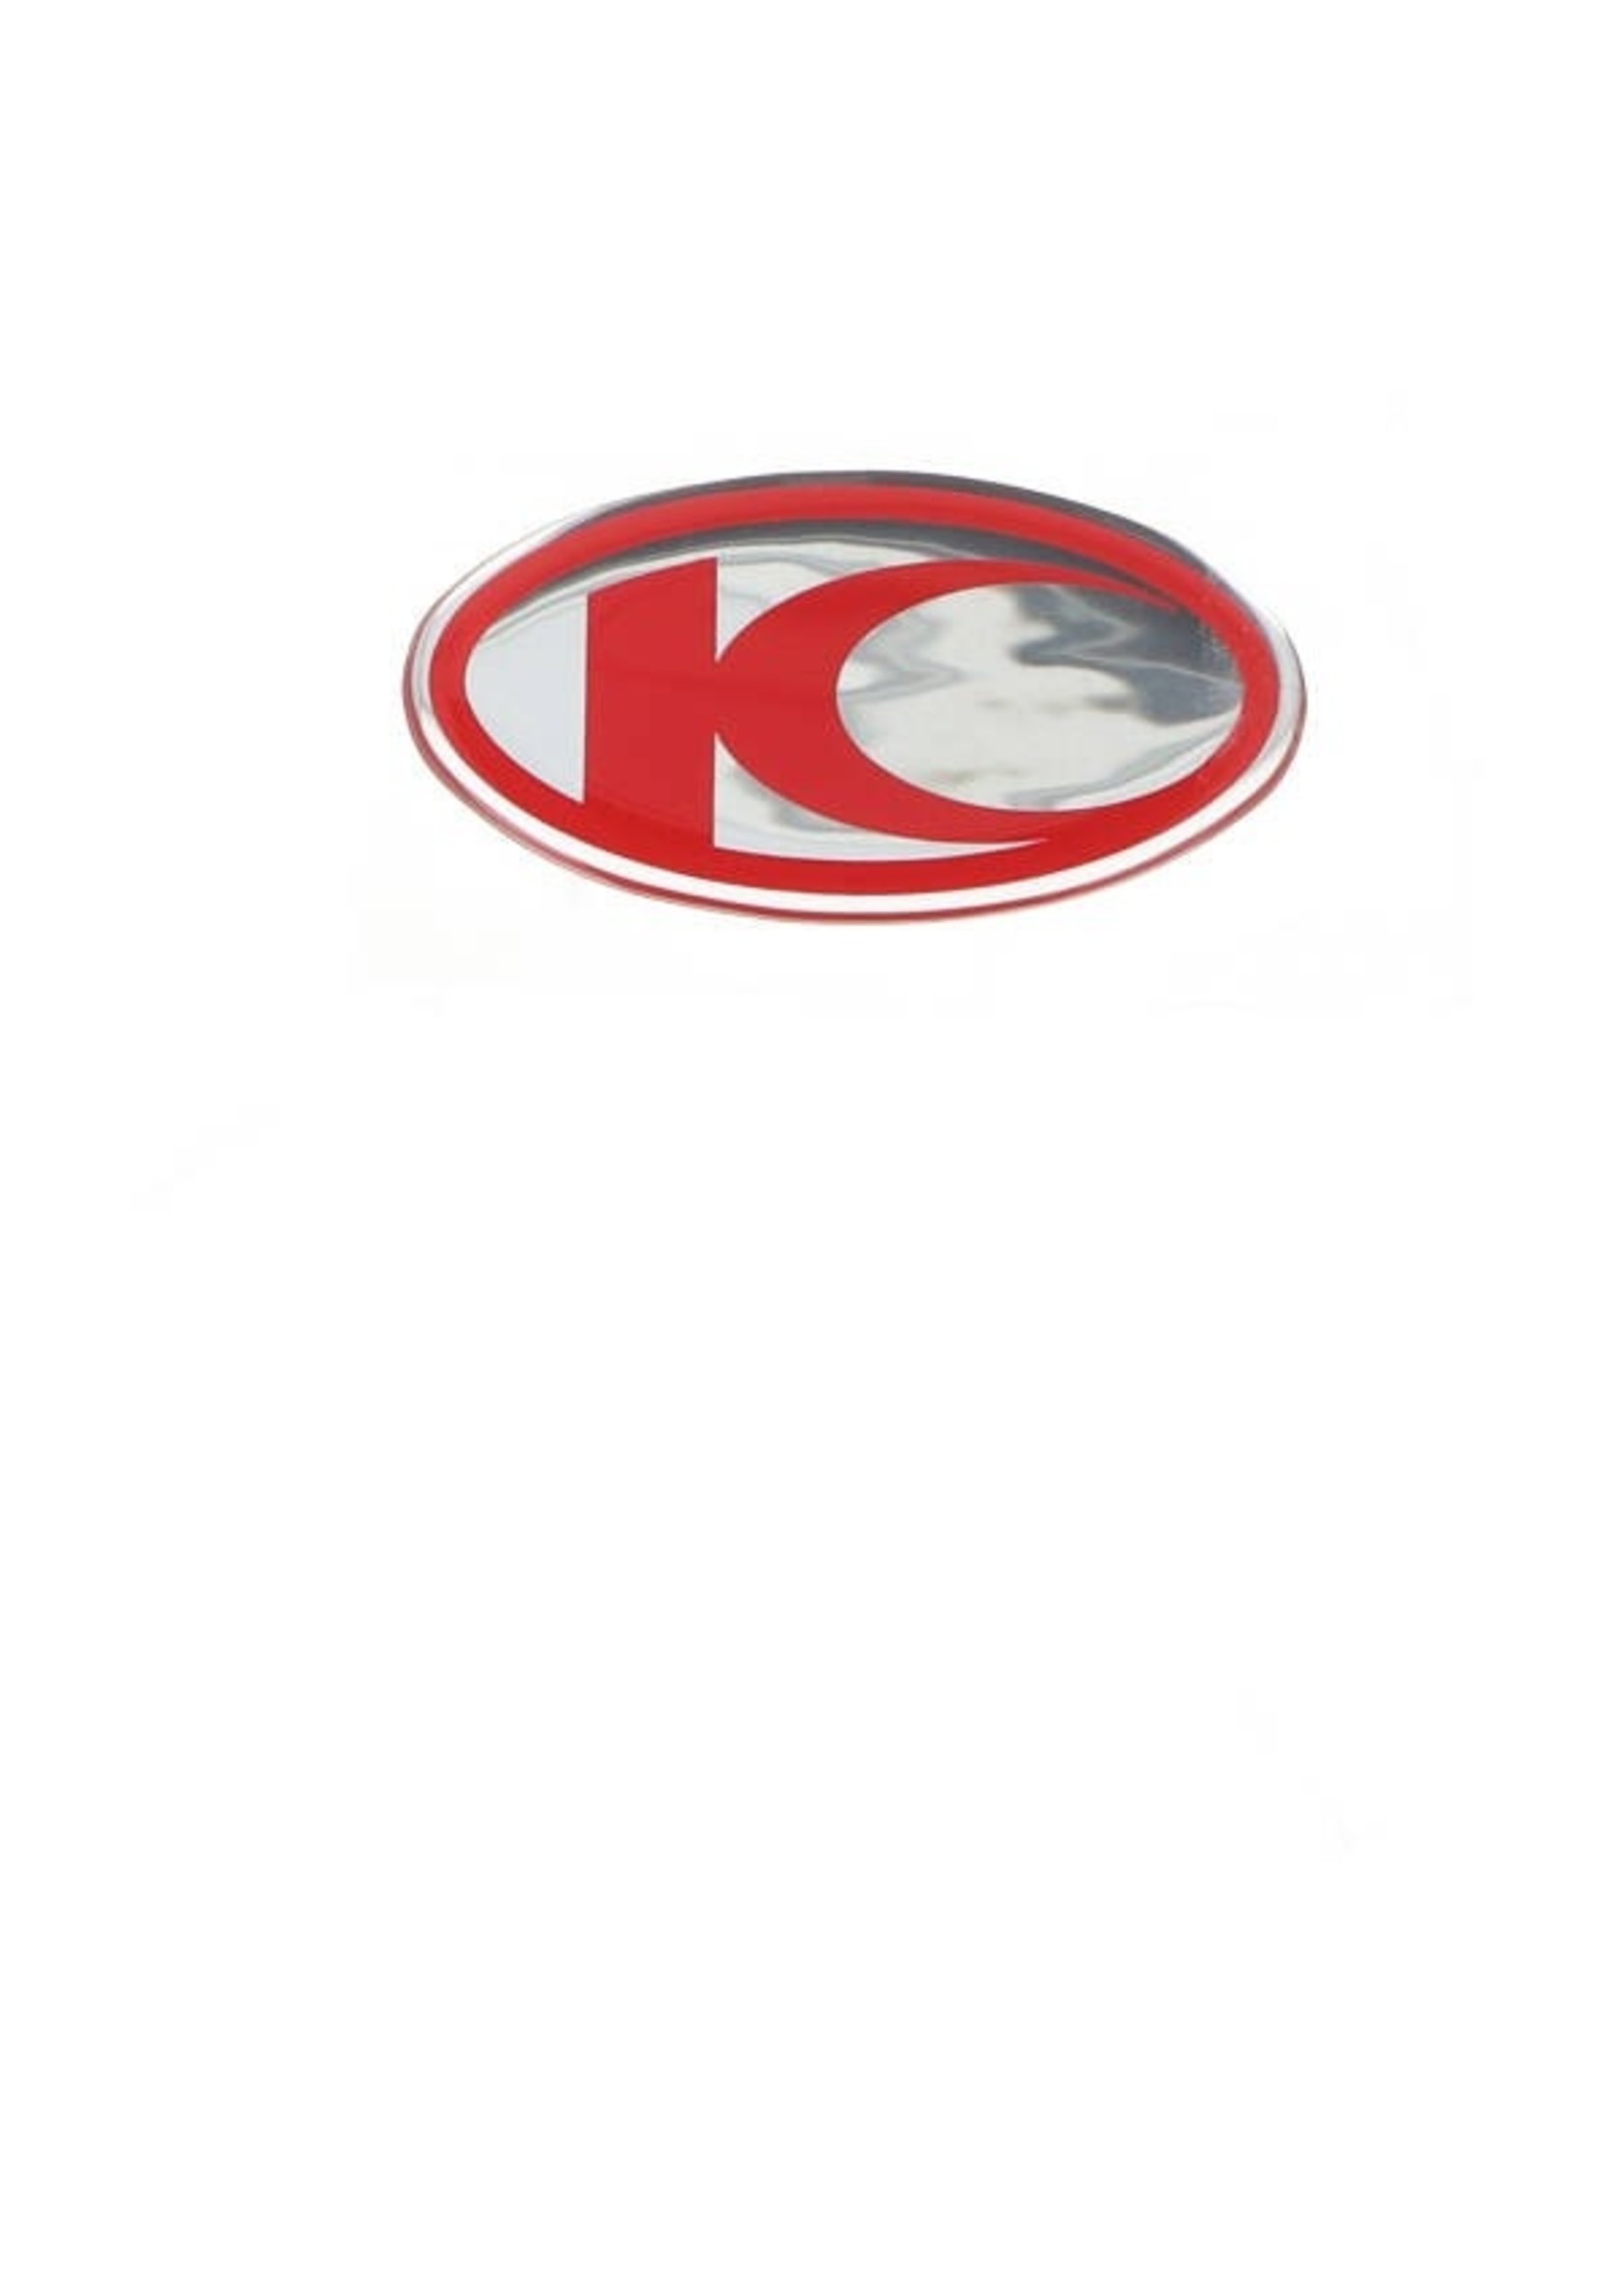 Kymco sticker kymco logo klein grand dink/super9/vit rood kymco orig 86102-kfa6-e00-t0